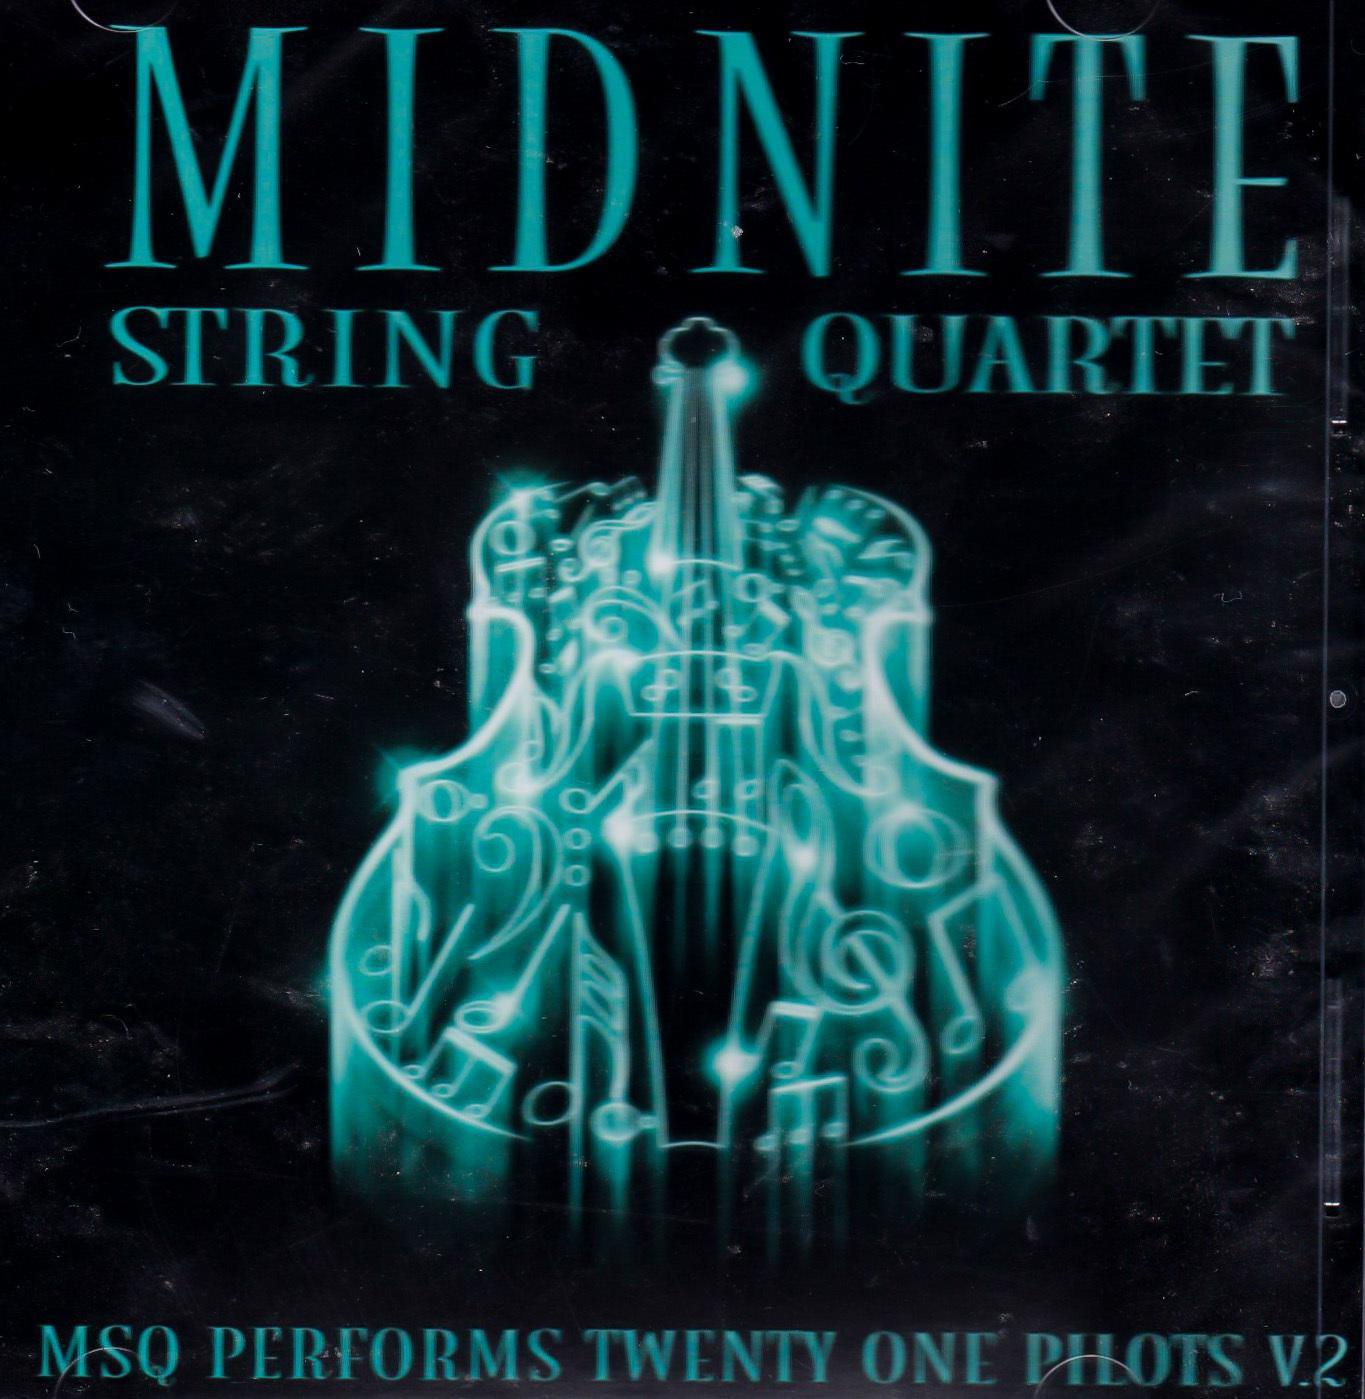 Midnight String Quartet Performs Twenty One Pilots V2 -Msq CD